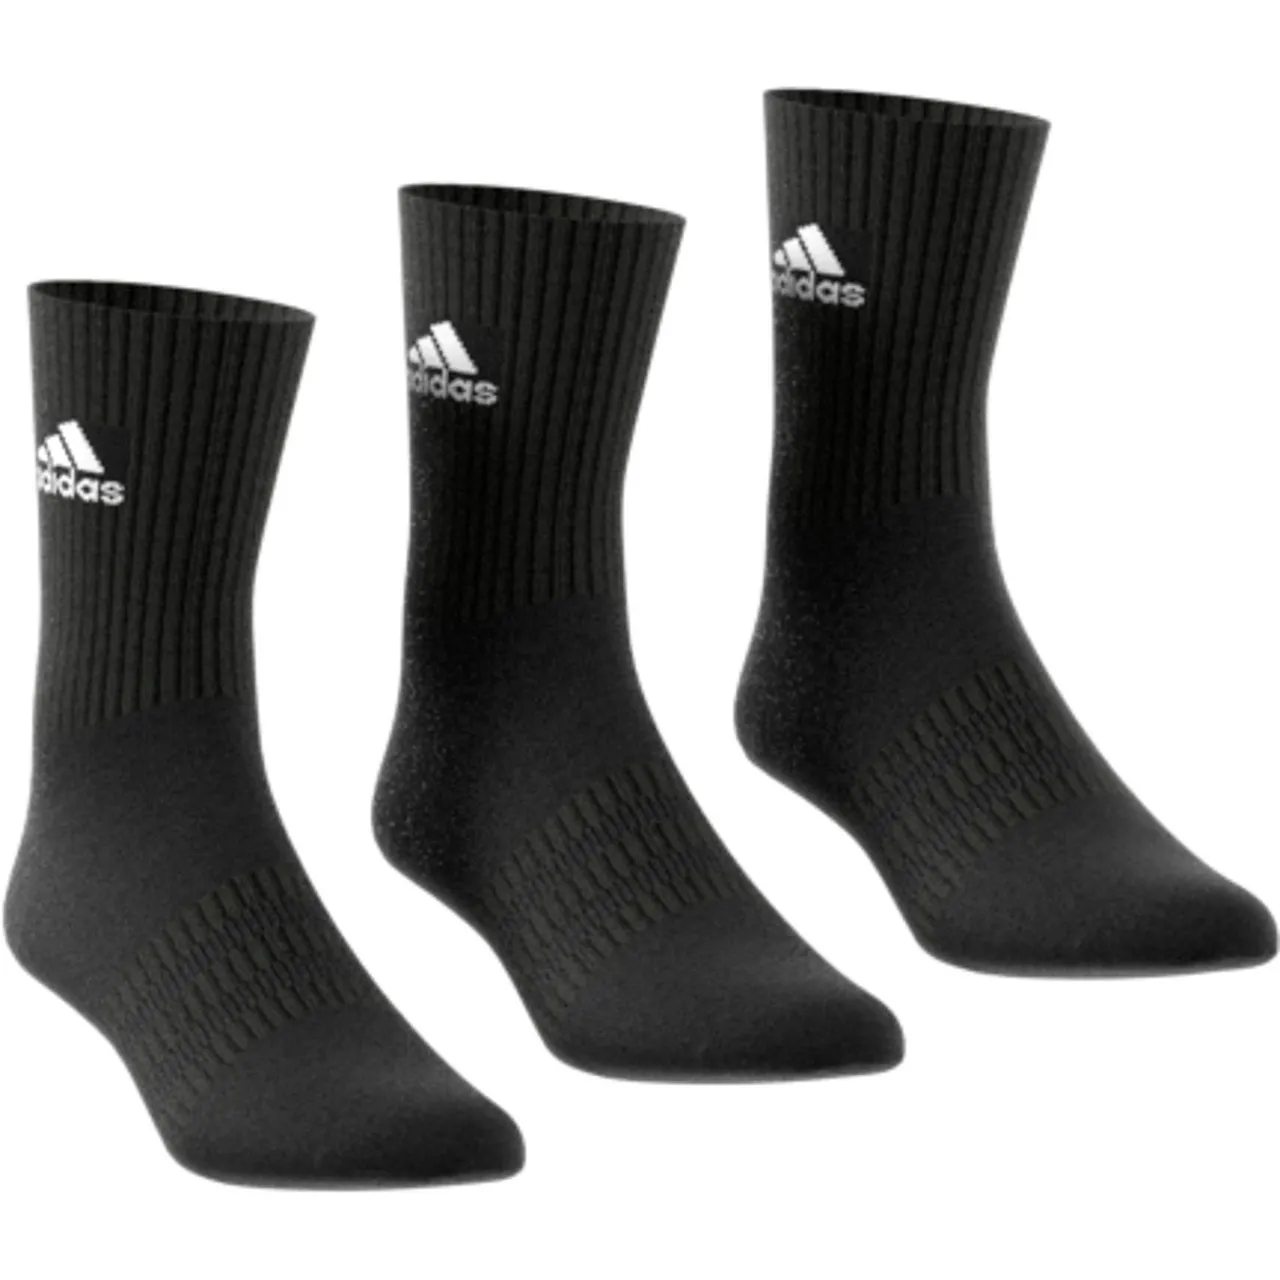 Adidas Men's CUSH CRW 3PP Socks